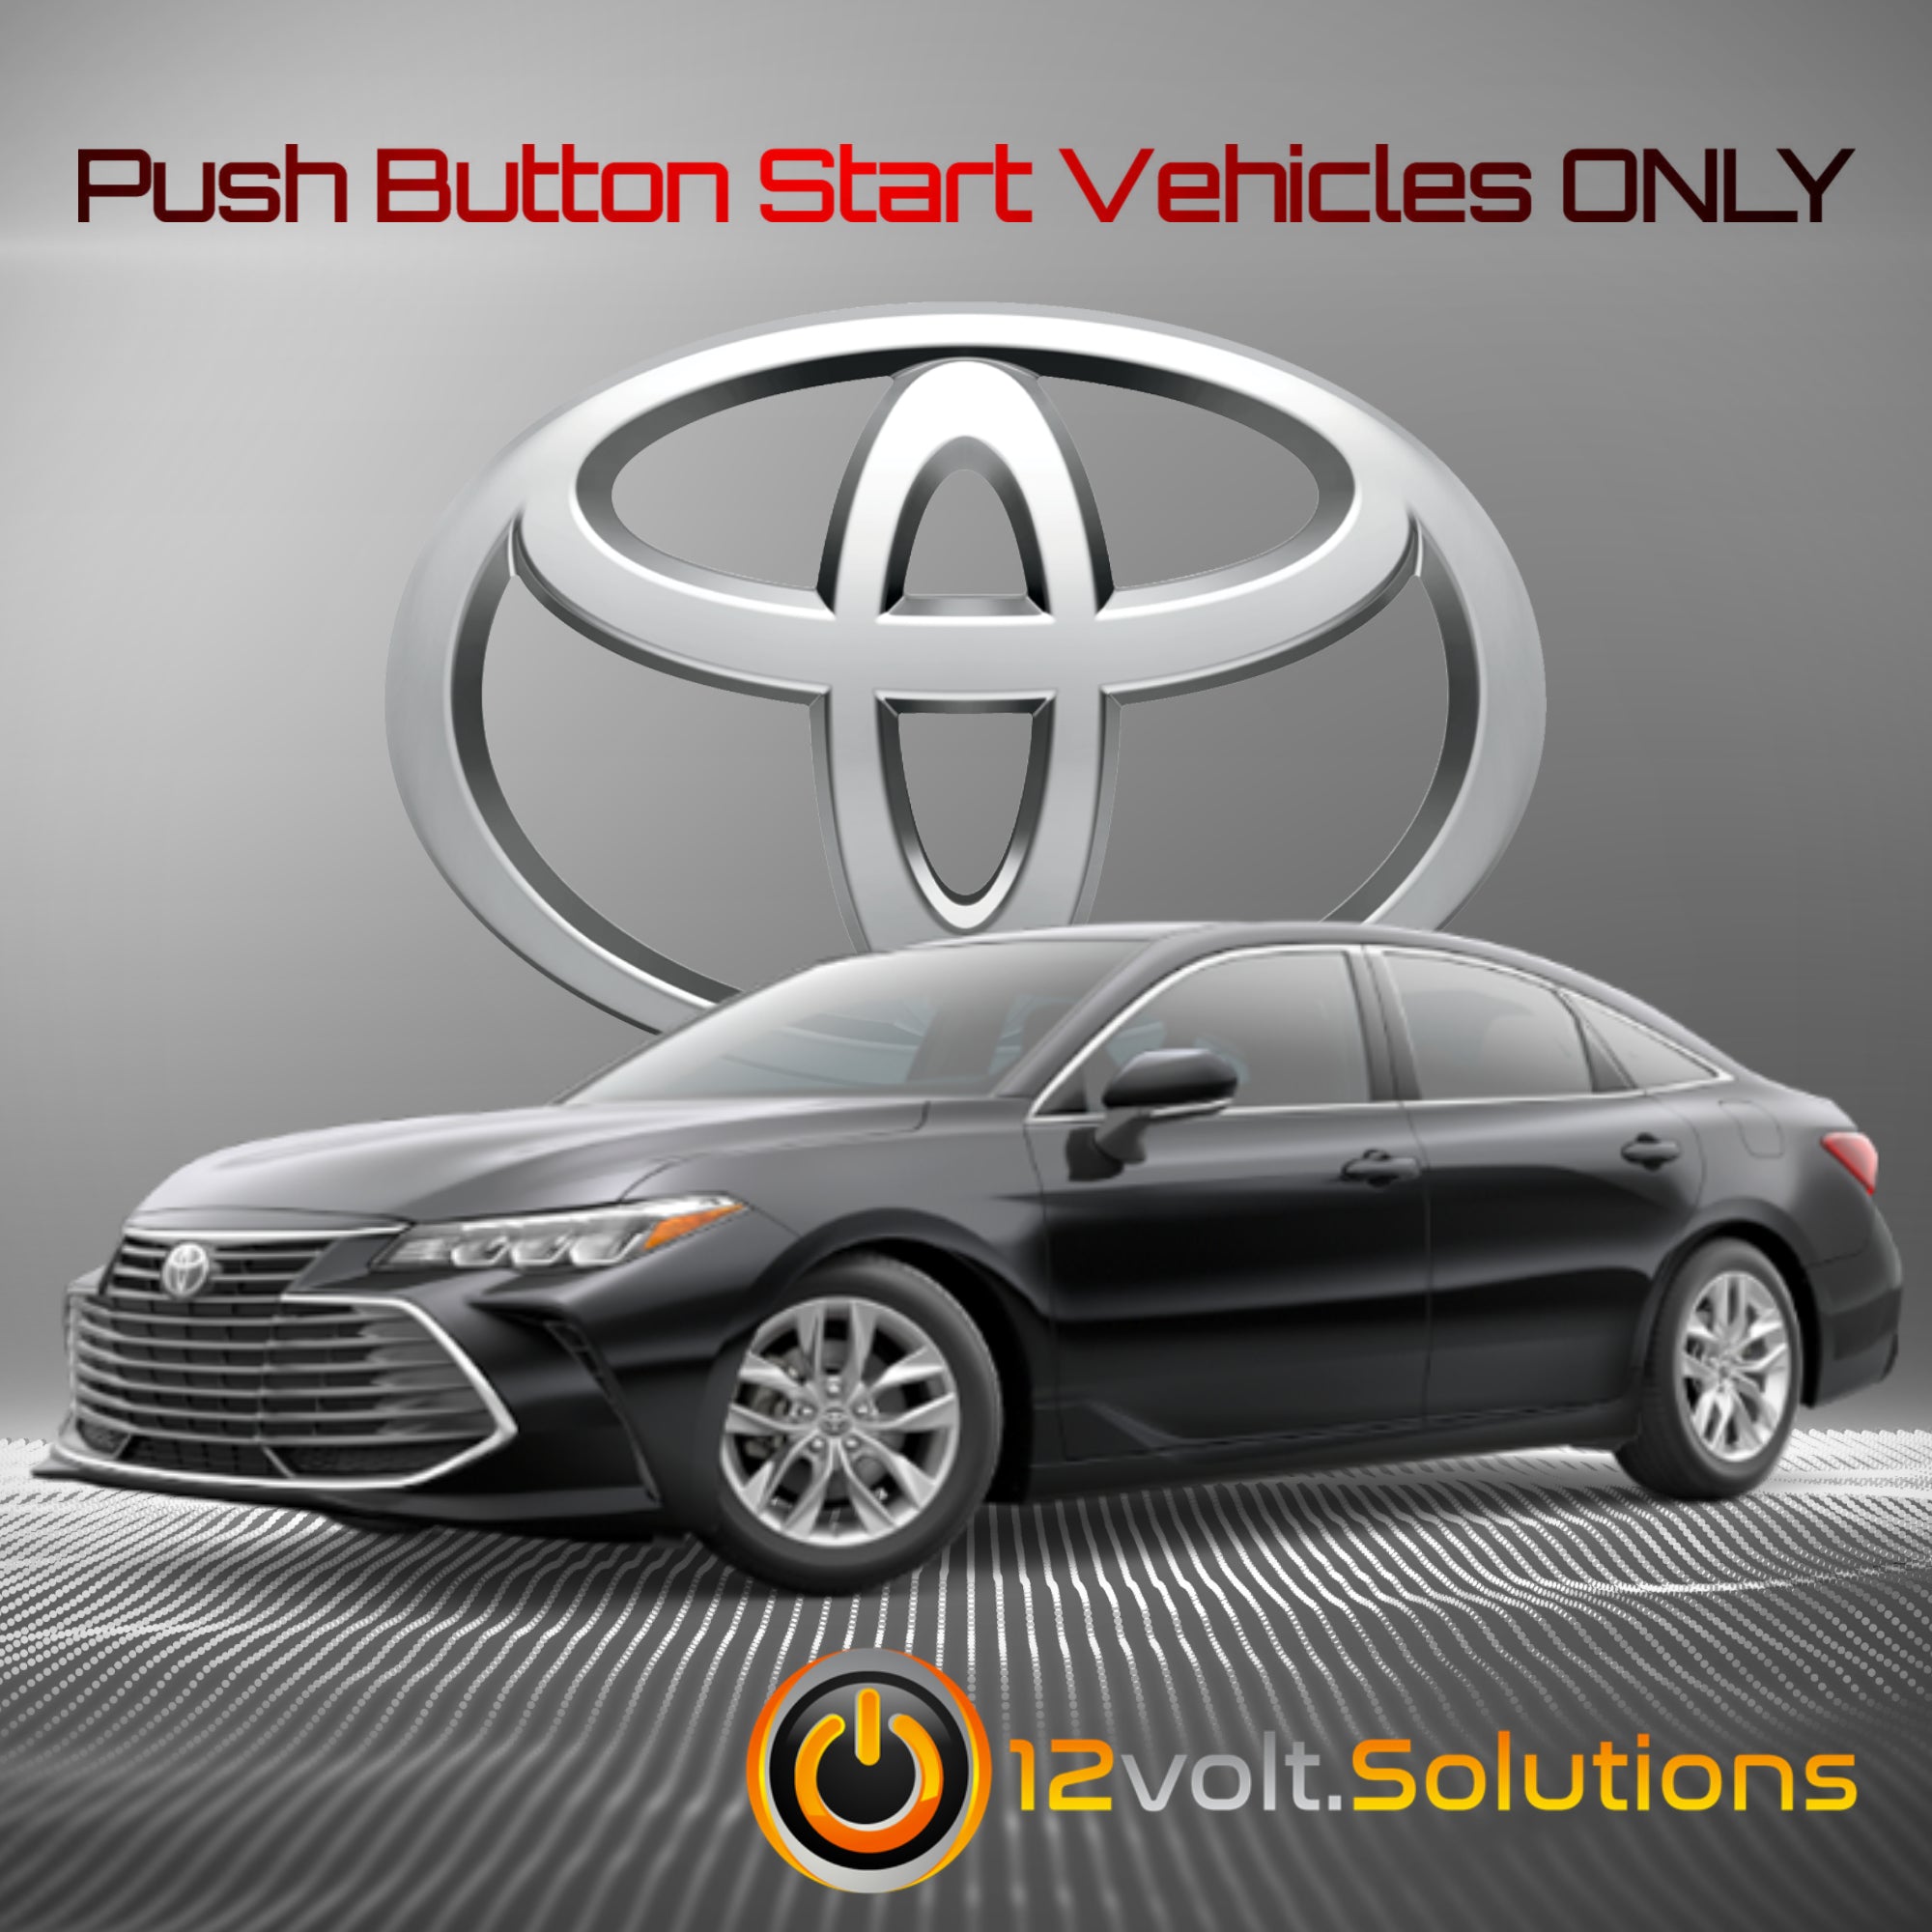 2019 Toyota Avalon Plug & Play Remote Start Kit (Push Button Start)-12Volt.Solutions